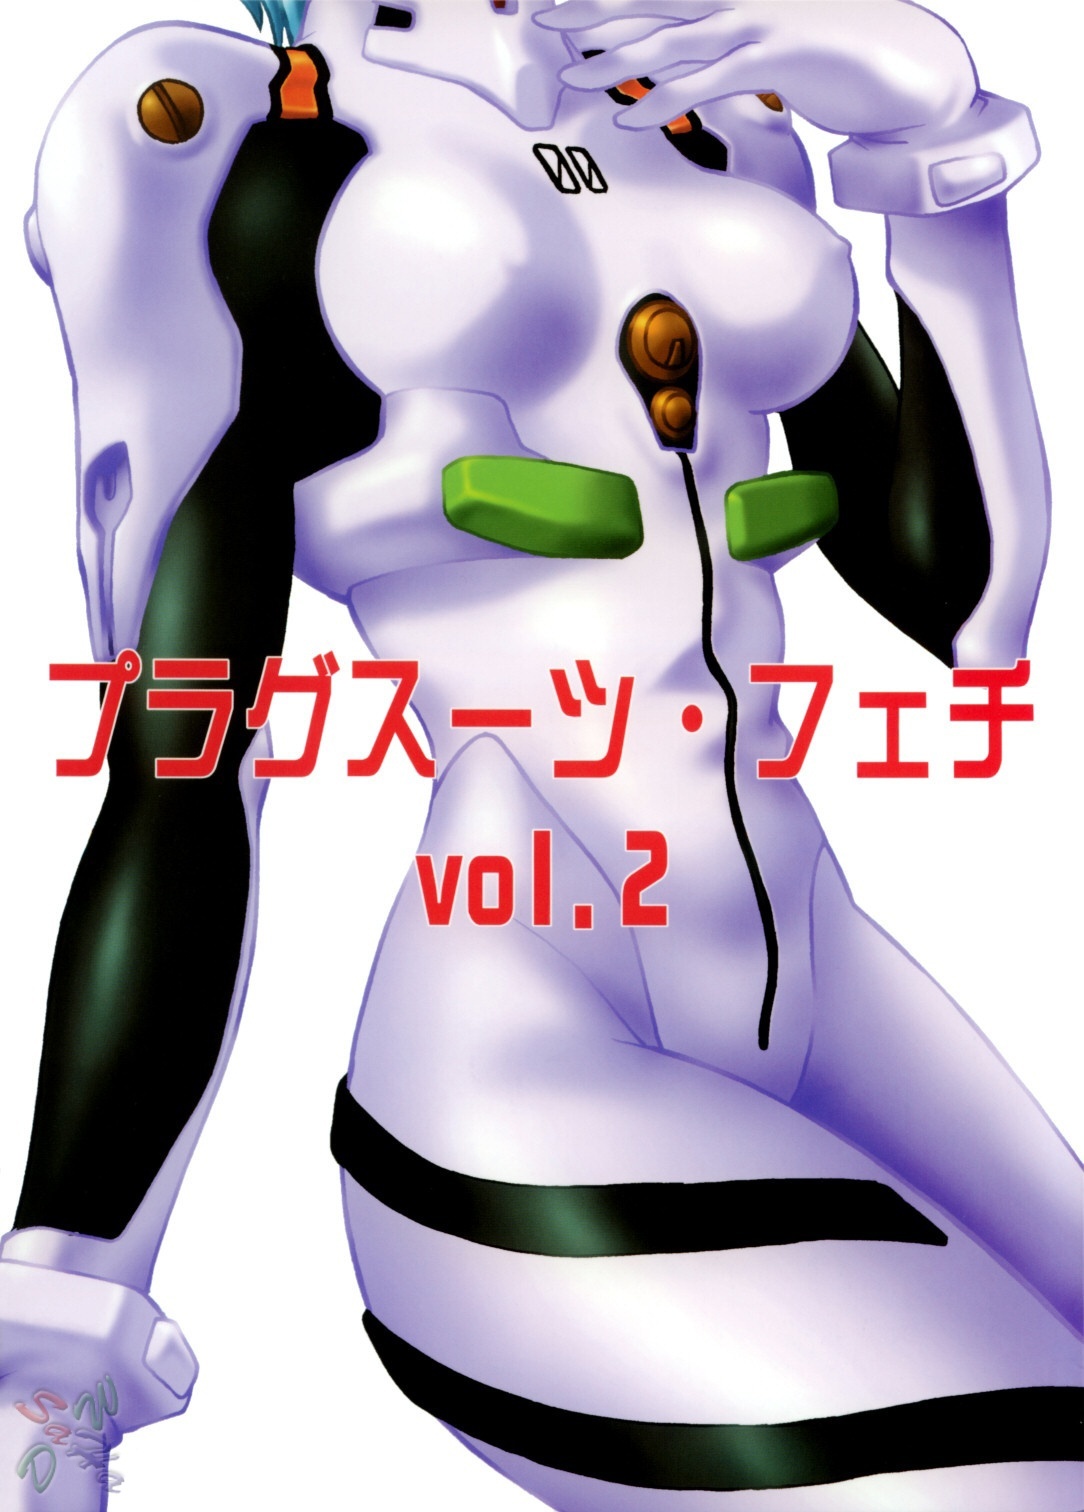 Plug Suit Fetish Vol. 2 neon genesis evangelion hentai manga